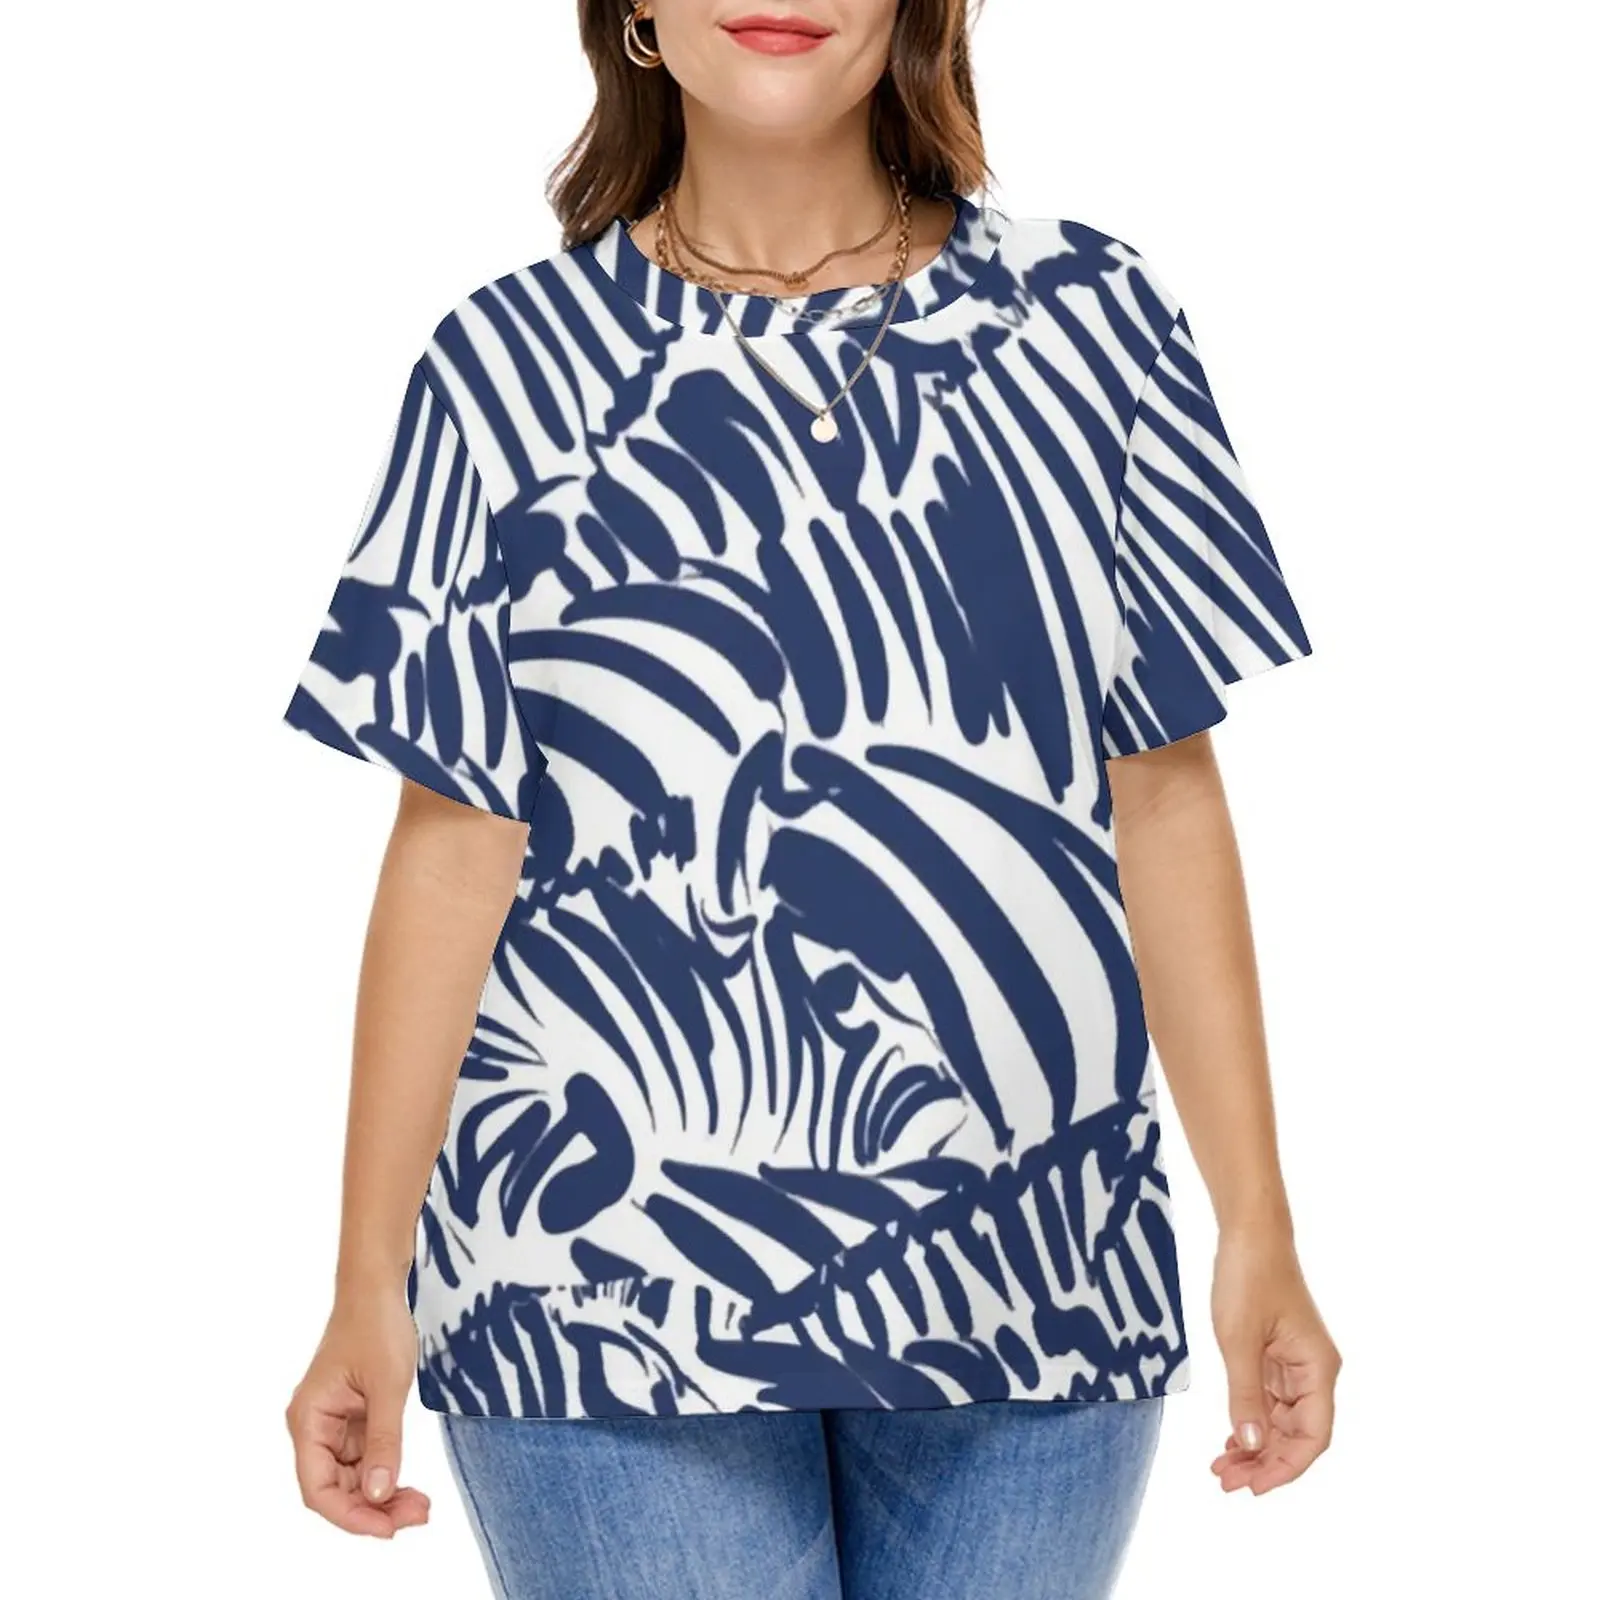 Zebra Stripe Navy T-Shirt Abstract Fun Animal Retro T Shirts Short Sleeve Streetwear Tee Shirt Summer Graphic Tees Plus Size 7XL